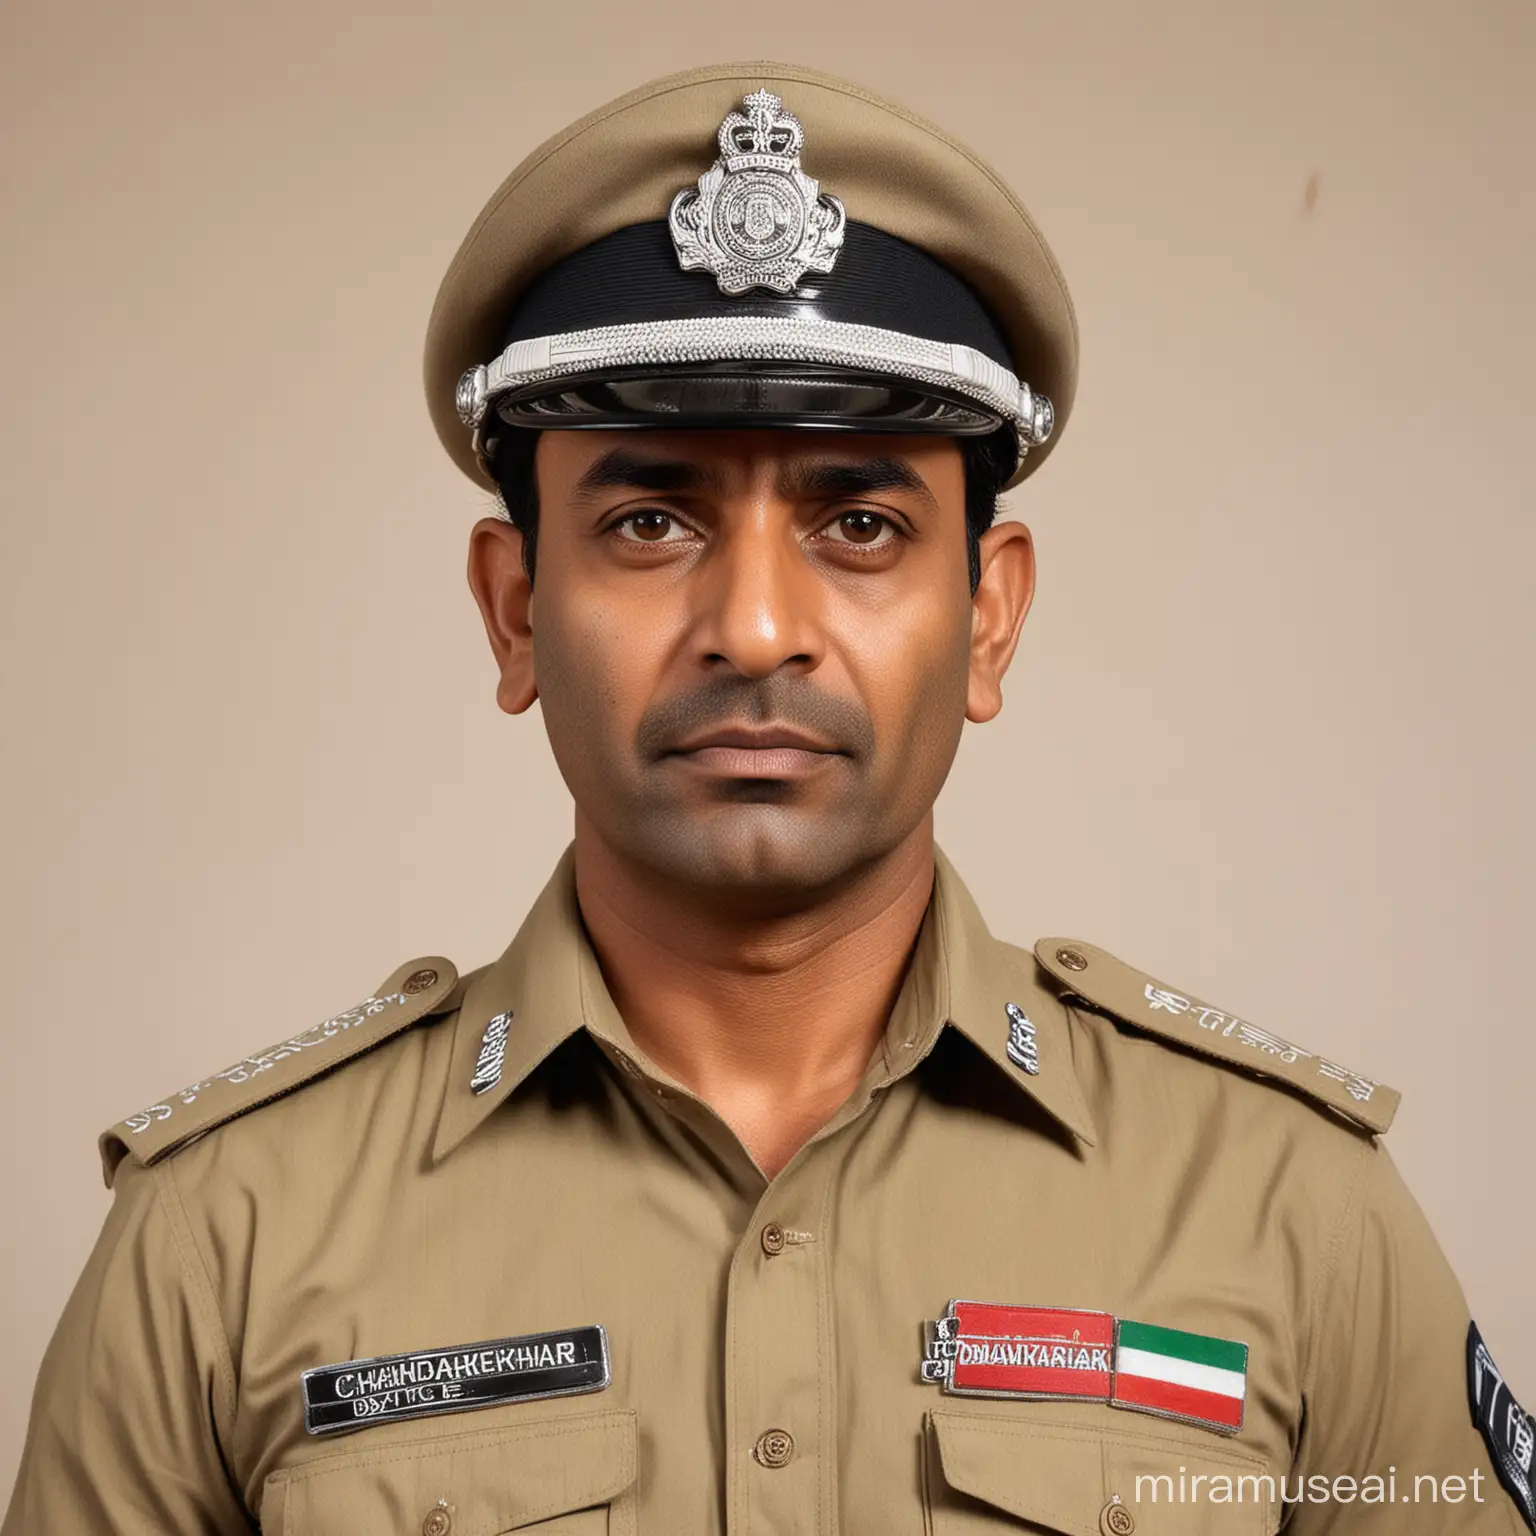 52YearOld Aggressive Indian Police Officer in Khaki Uniform Named Chandrasekhar